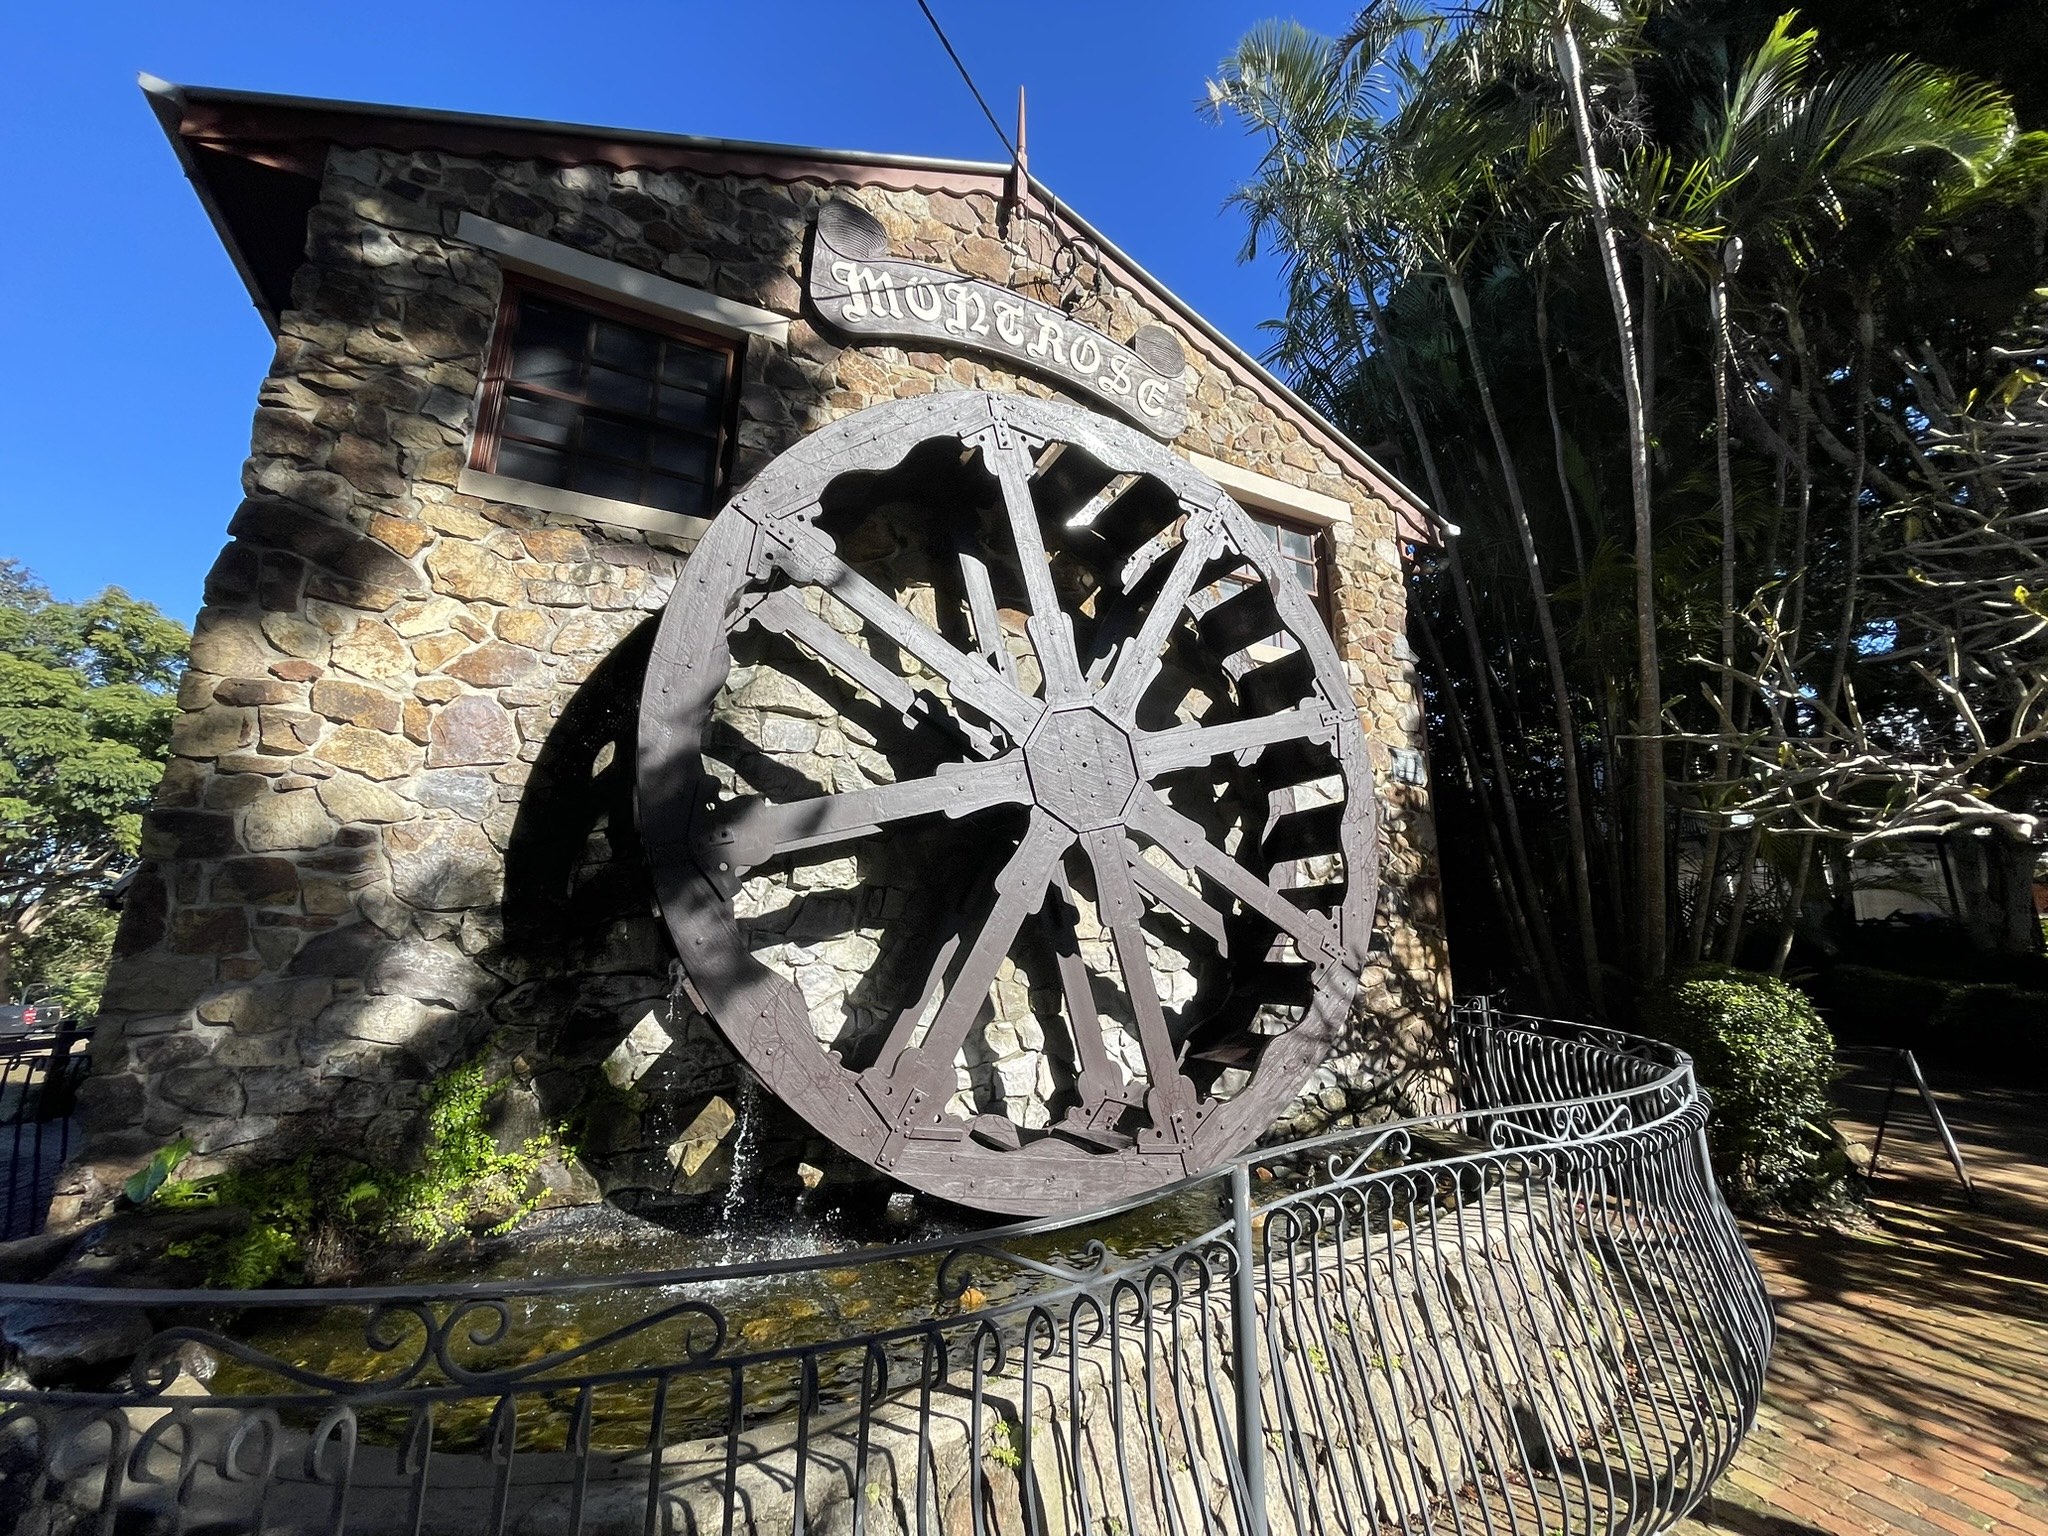 The Montrose Waterwheel